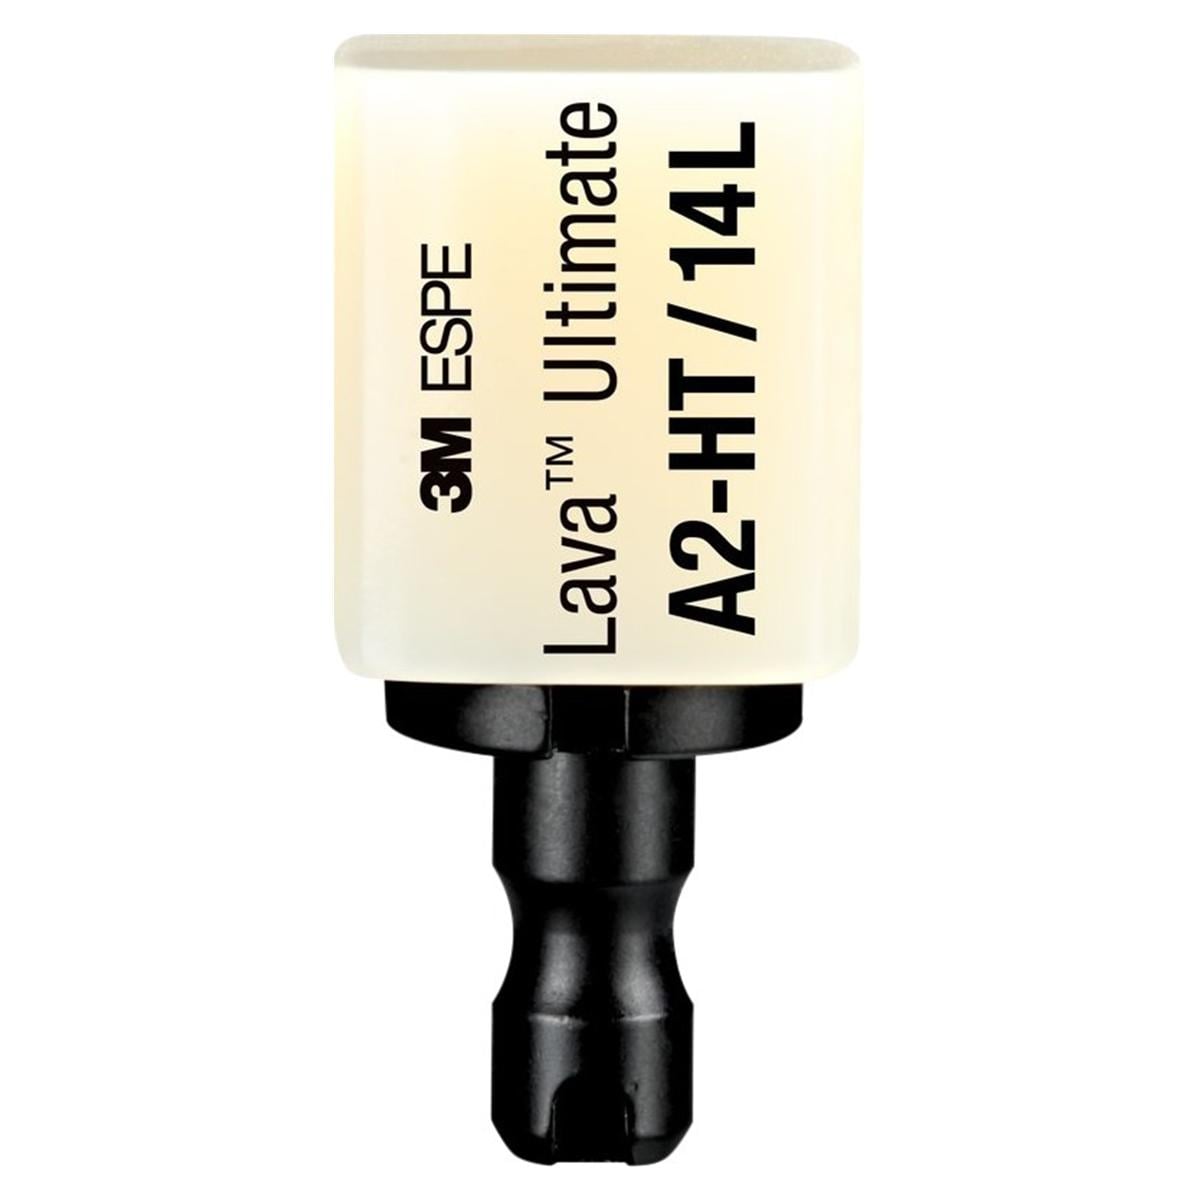 Lava Ultimate LT - I12, A2